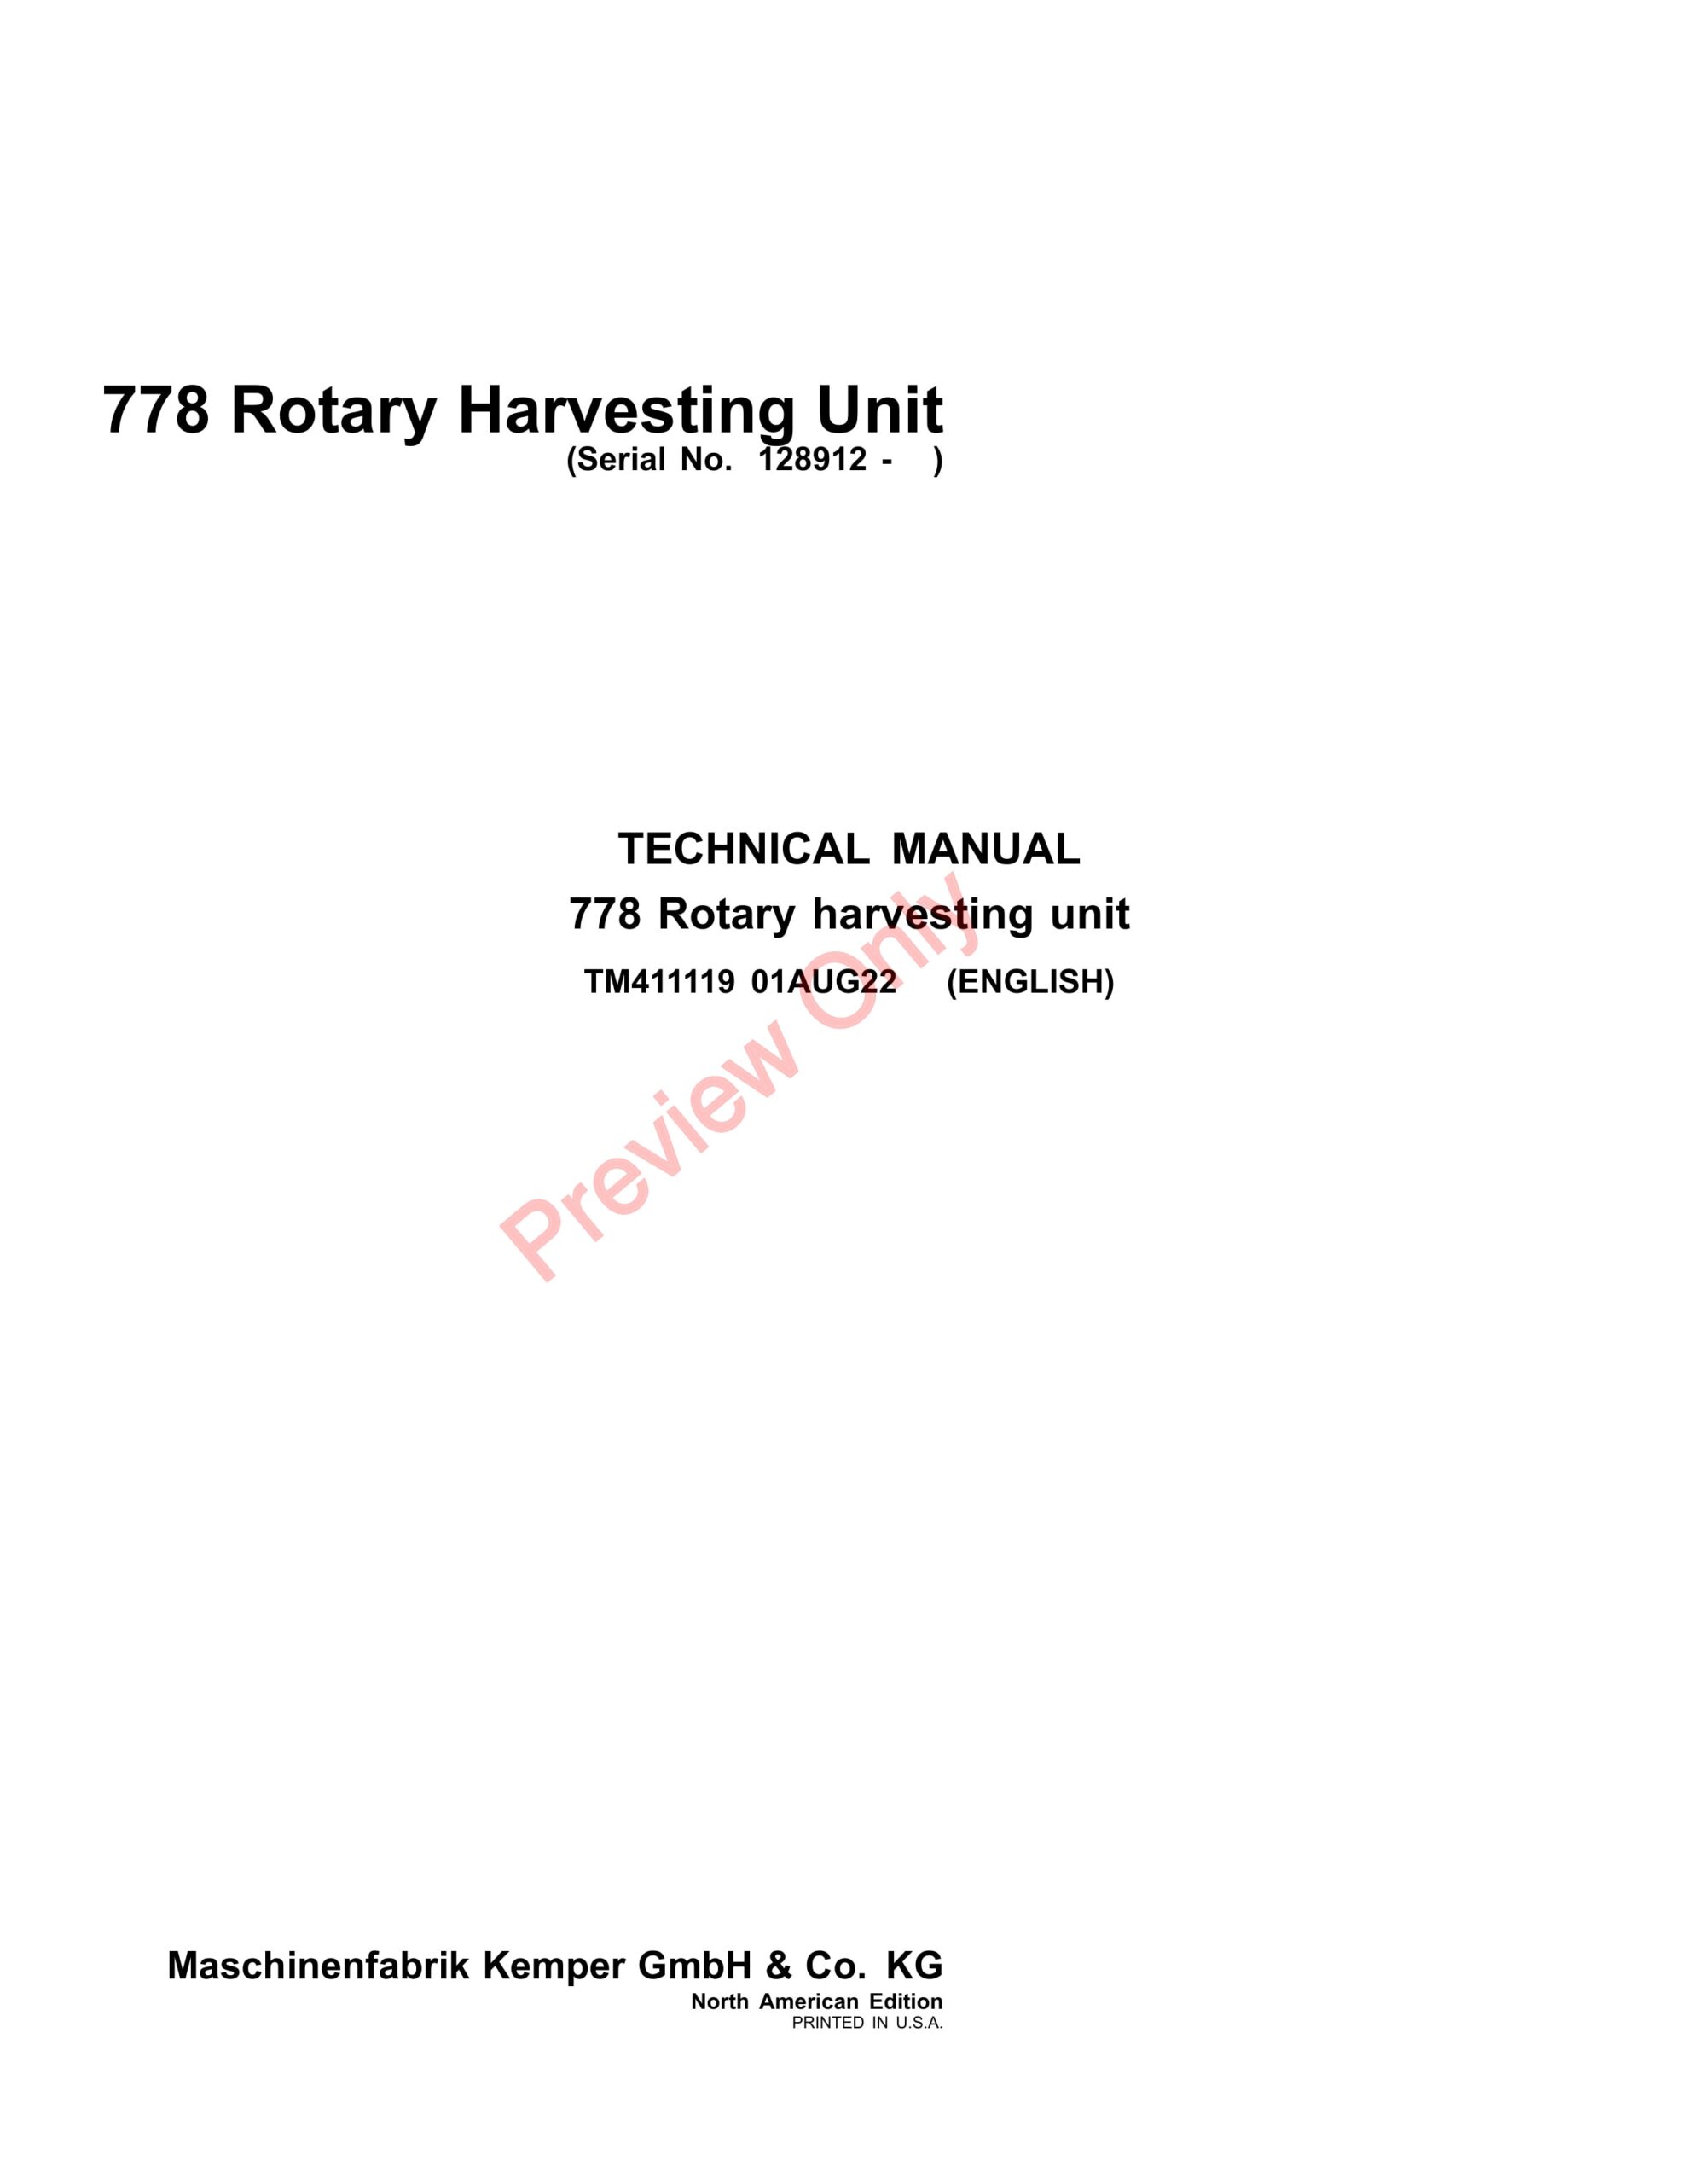 John Deere 778 Rotary Harvesting Unit Technical Manual TM411119 01AUG22-1